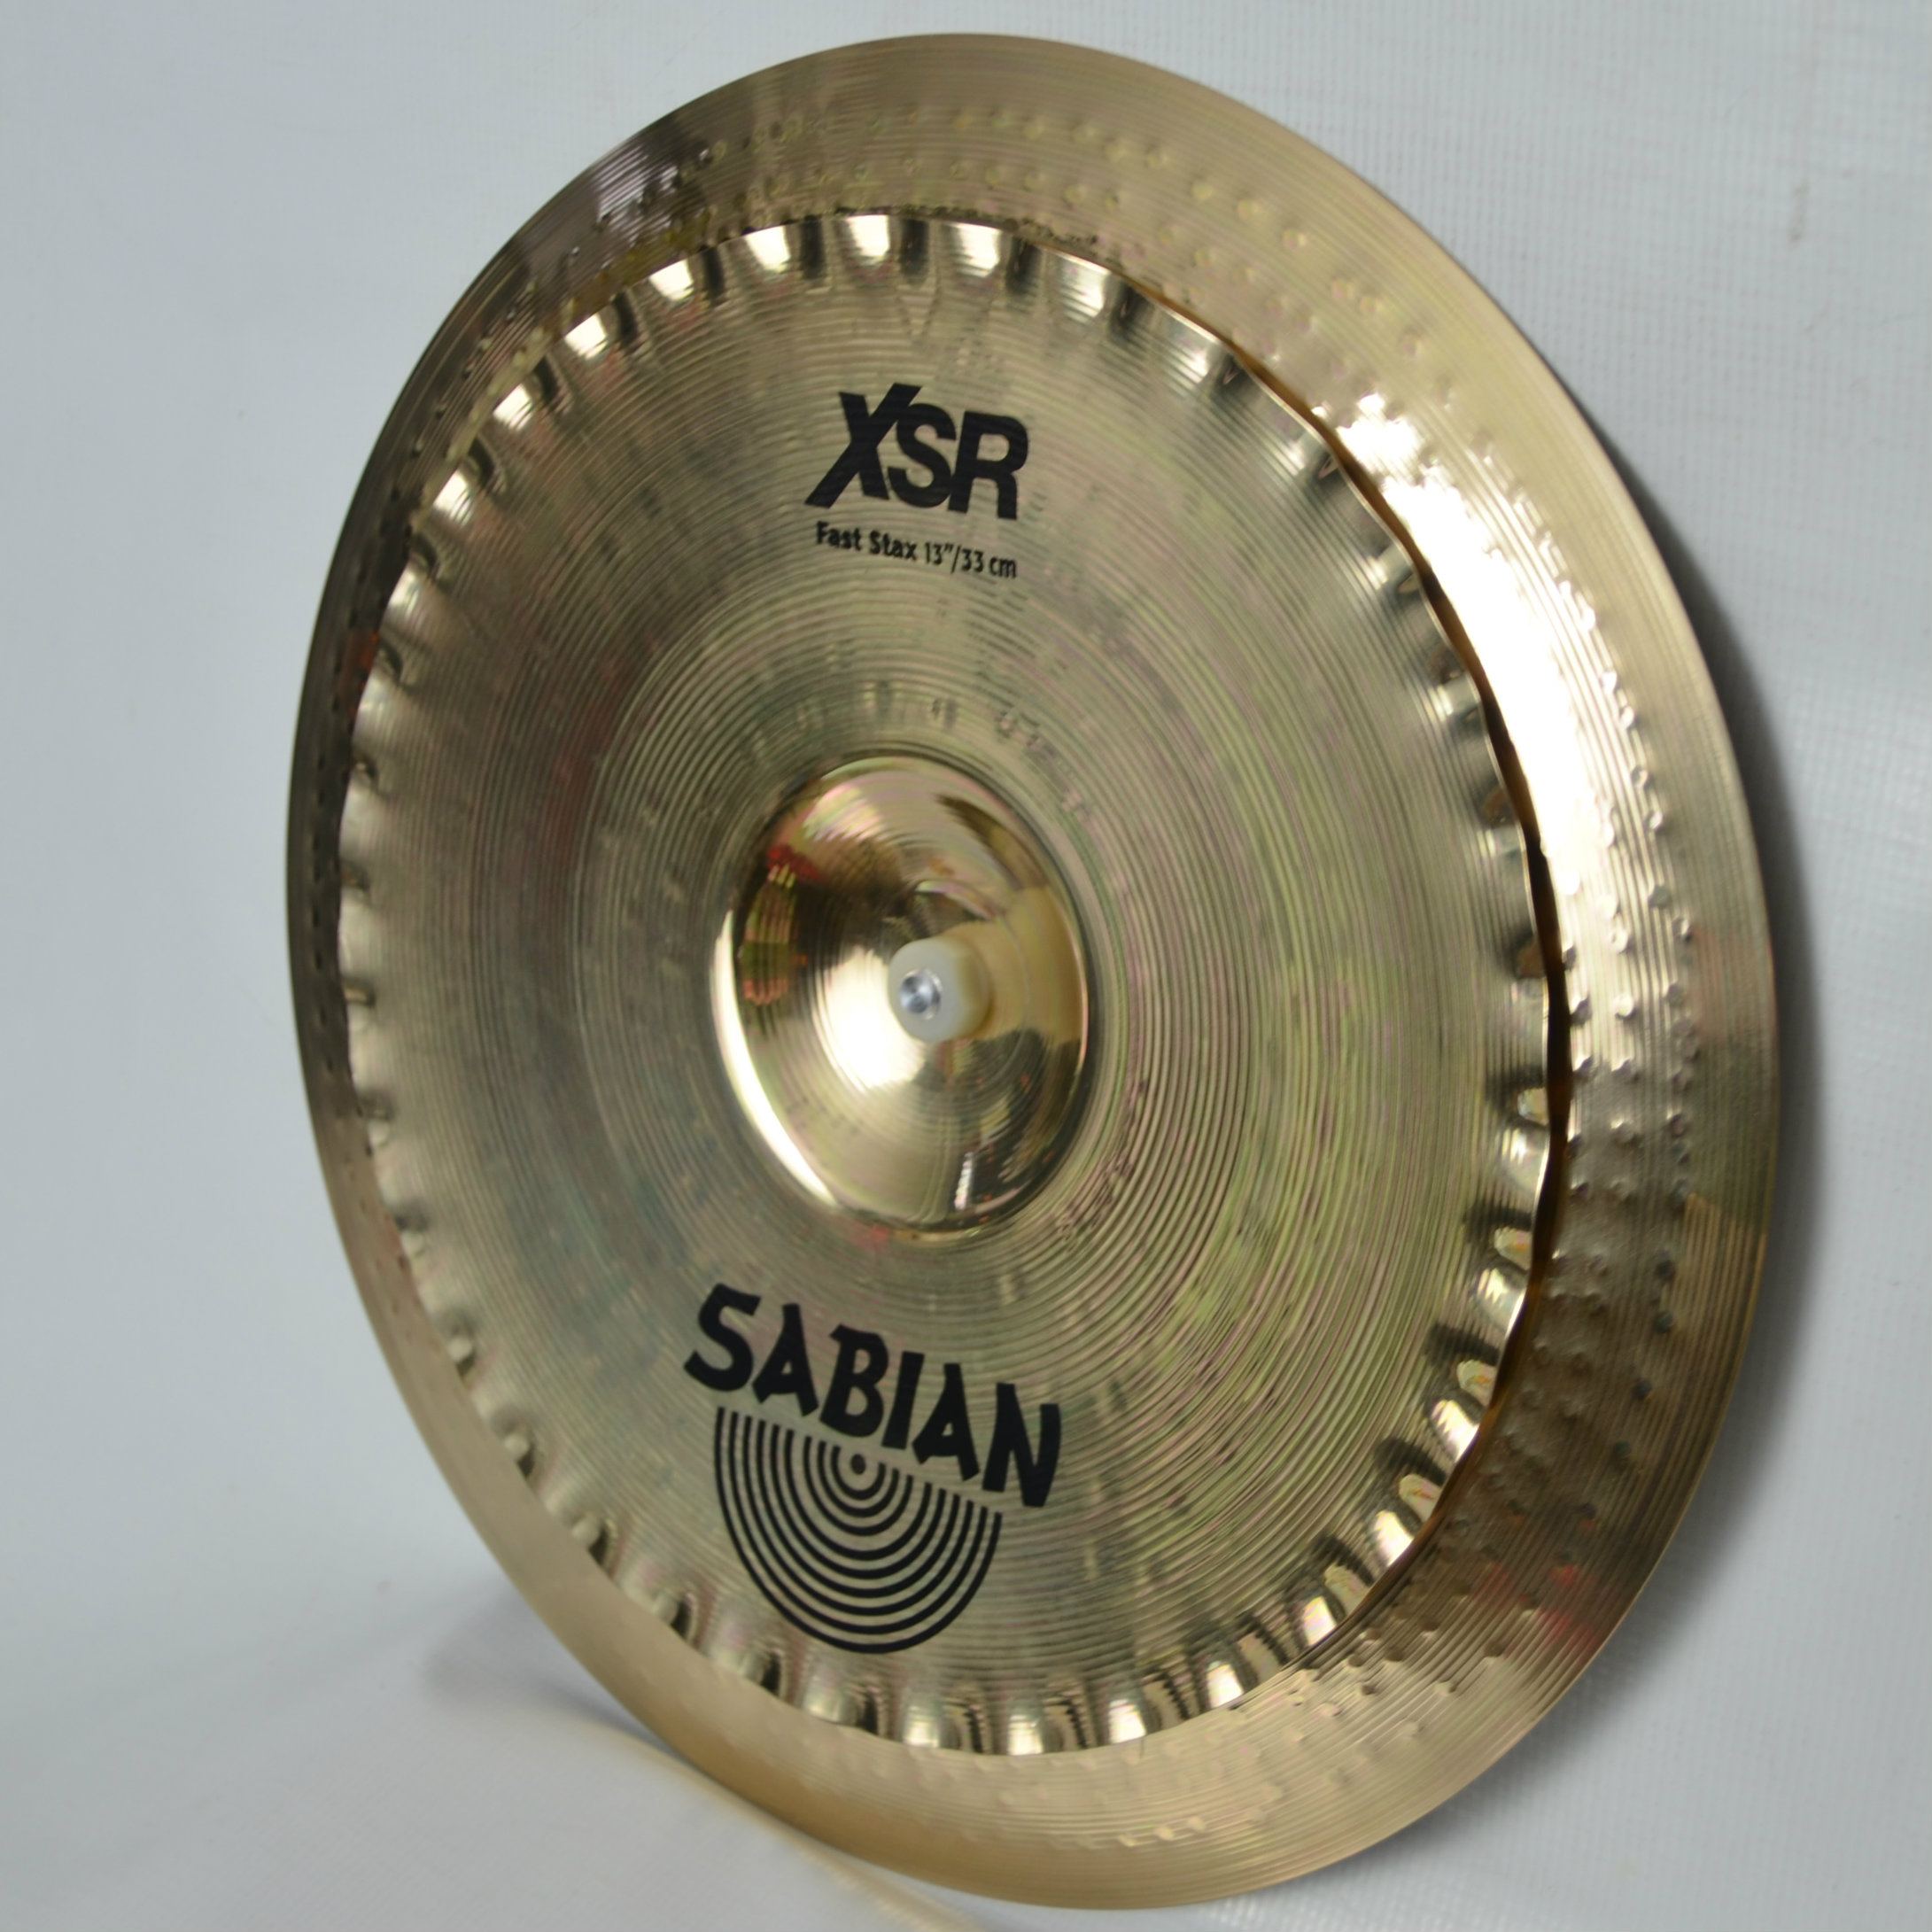 Sabian XSR Fast stax cymbal